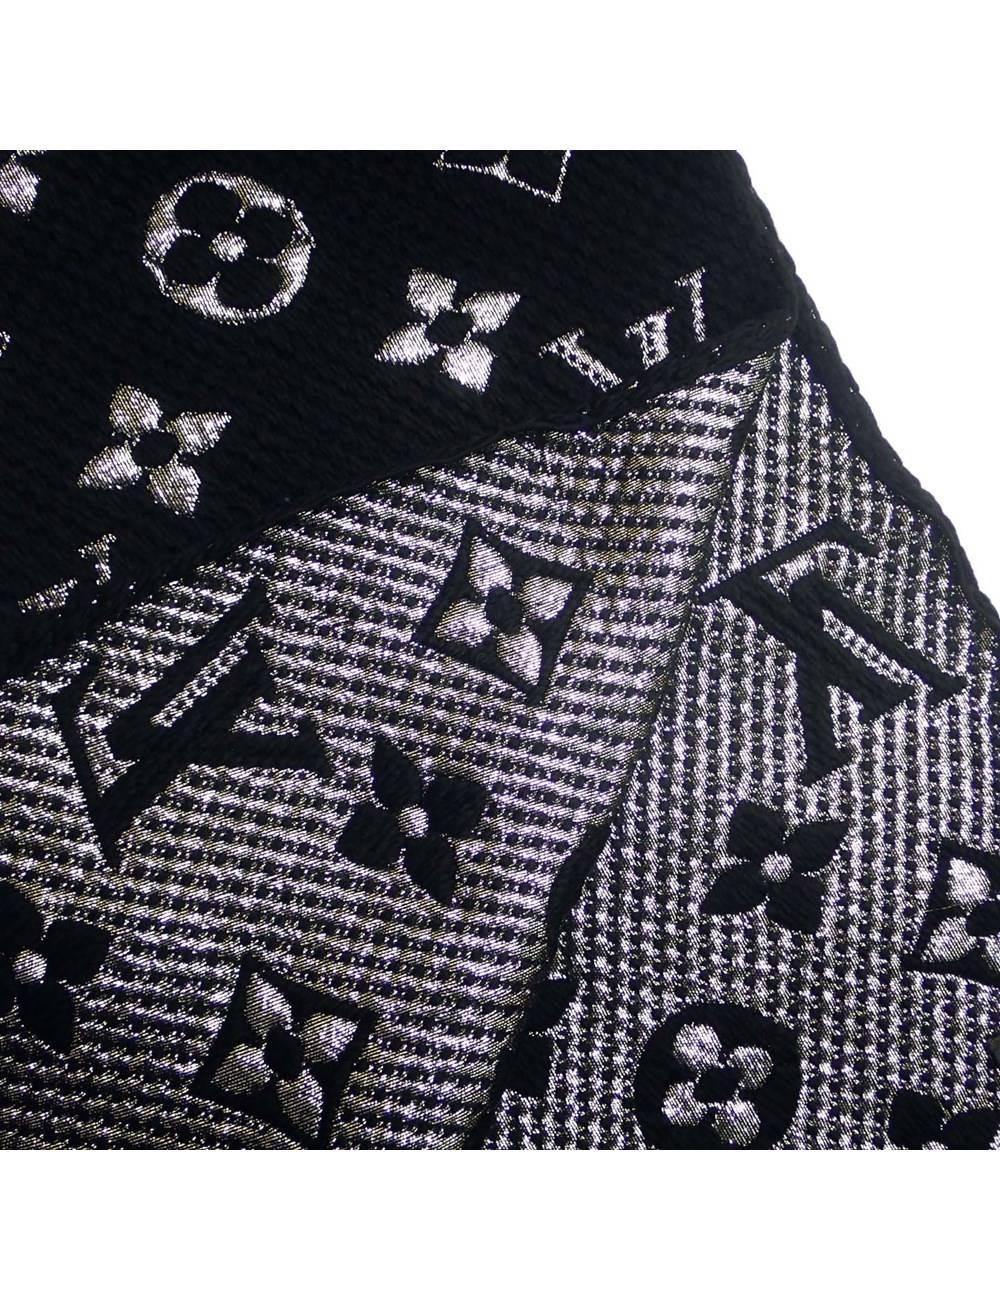 Louis Vuitton Logomania Shine Scarf M75833 - Black In Excellent Condition For Sale In Los Angeles, CA